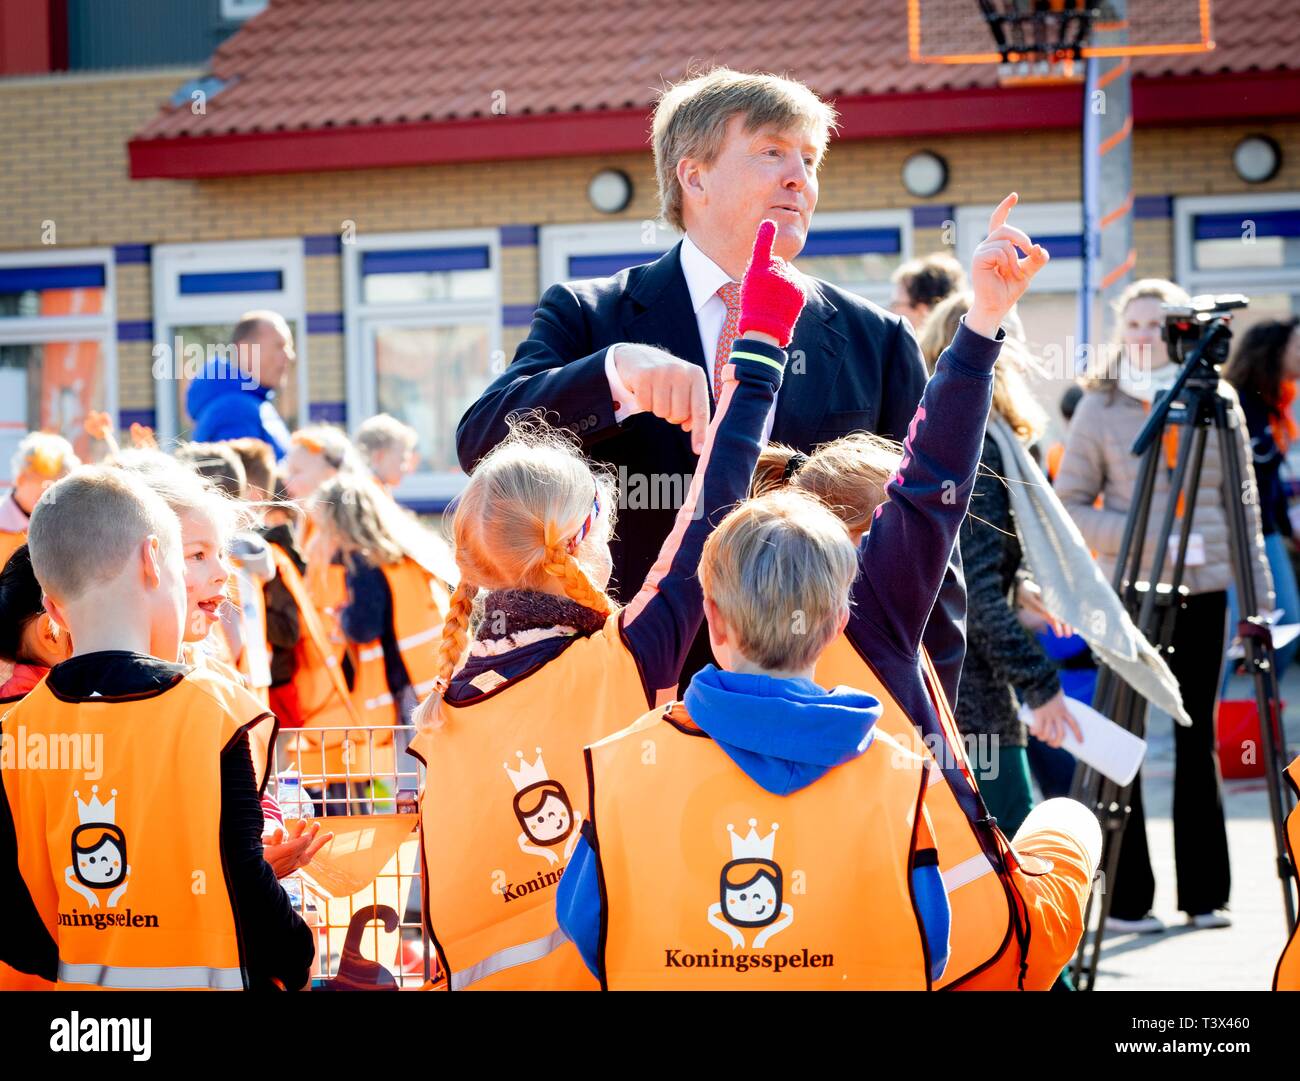 Lemmer, Netherlands. 12th Apr, 2019. King Willem-Alexander of The  Netherlands at the Christelijke Basisschool De Arke in Lemmer, on April 12,  2019, to attend the breakfast, to open the Koningsspelen (king games)